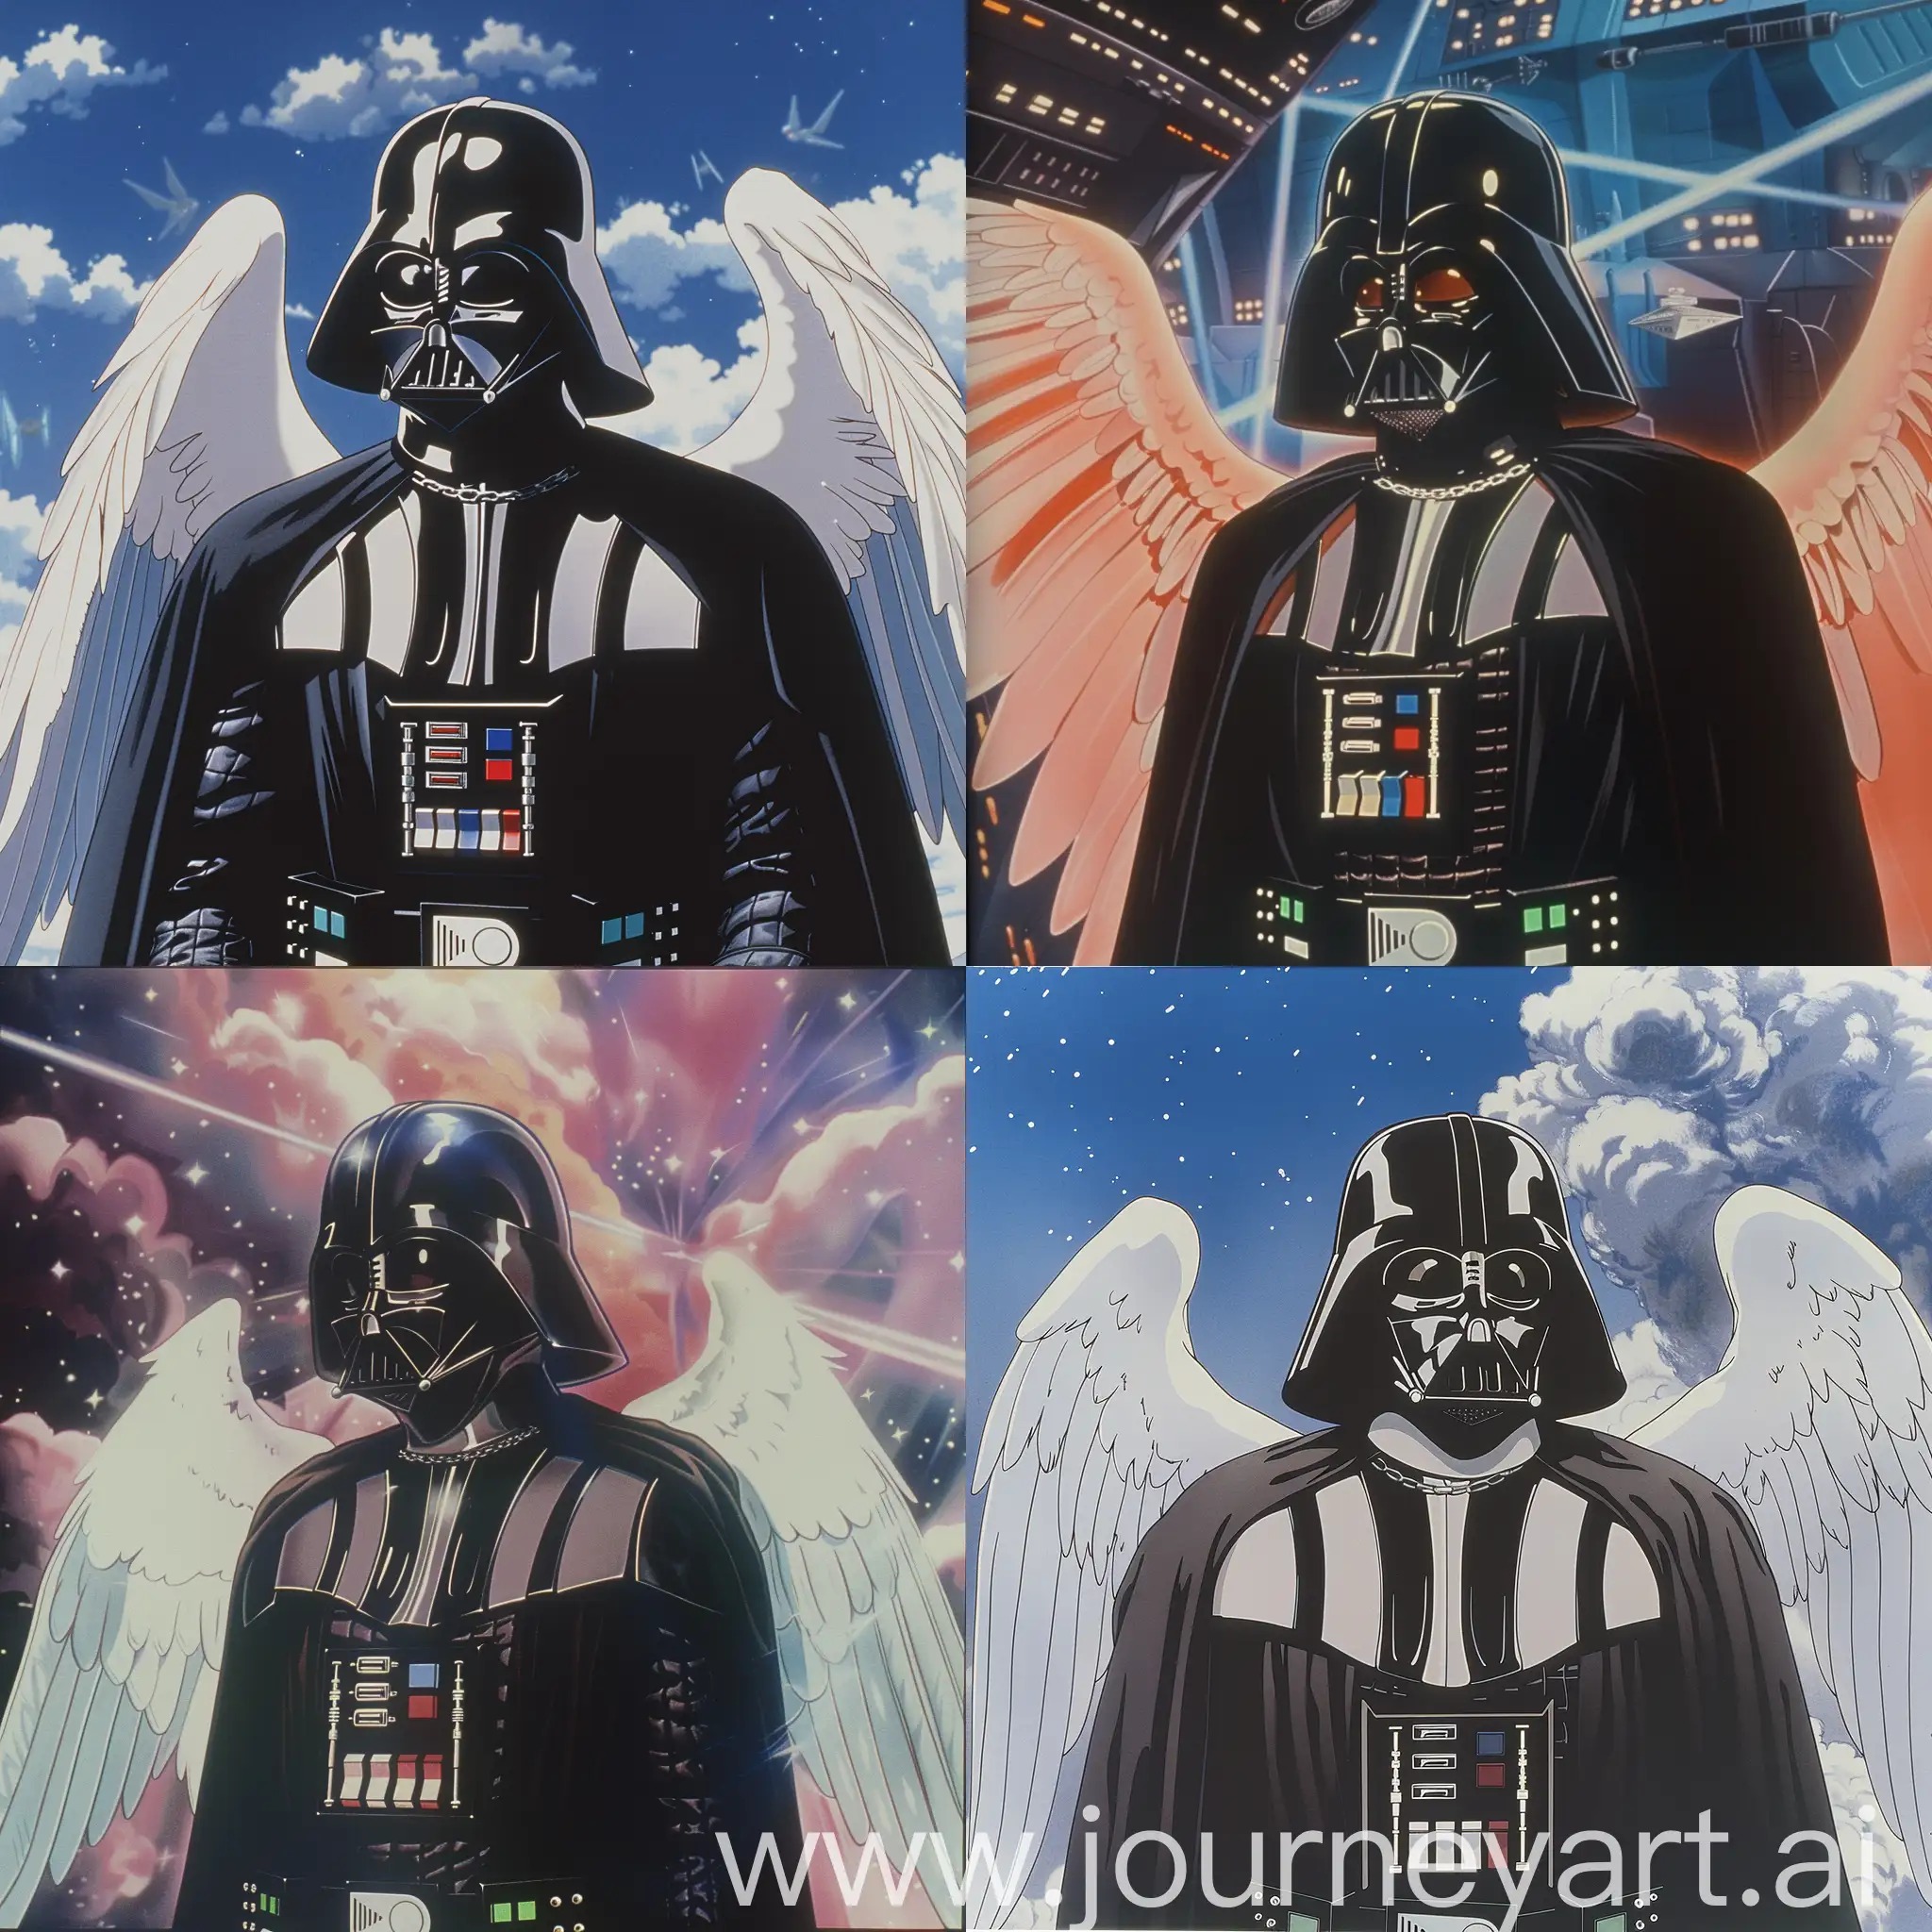 Darth-Vader-Anime-Portrait-Iconic-Villain-in-Angelic-Anime-Costume